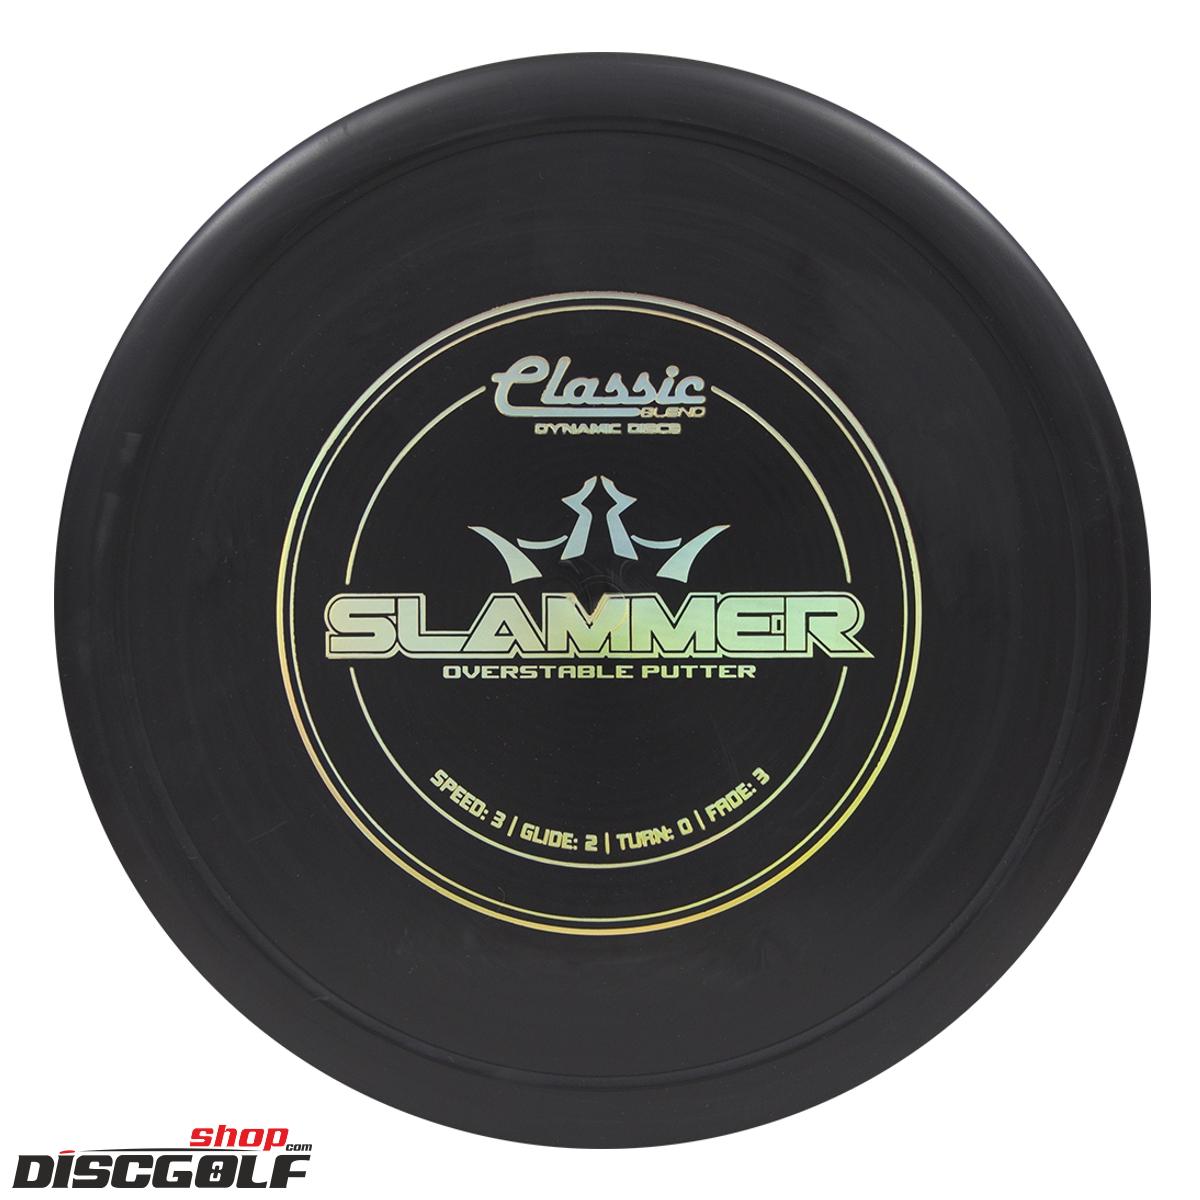 Dynamic Discs Slammer Classic Blend